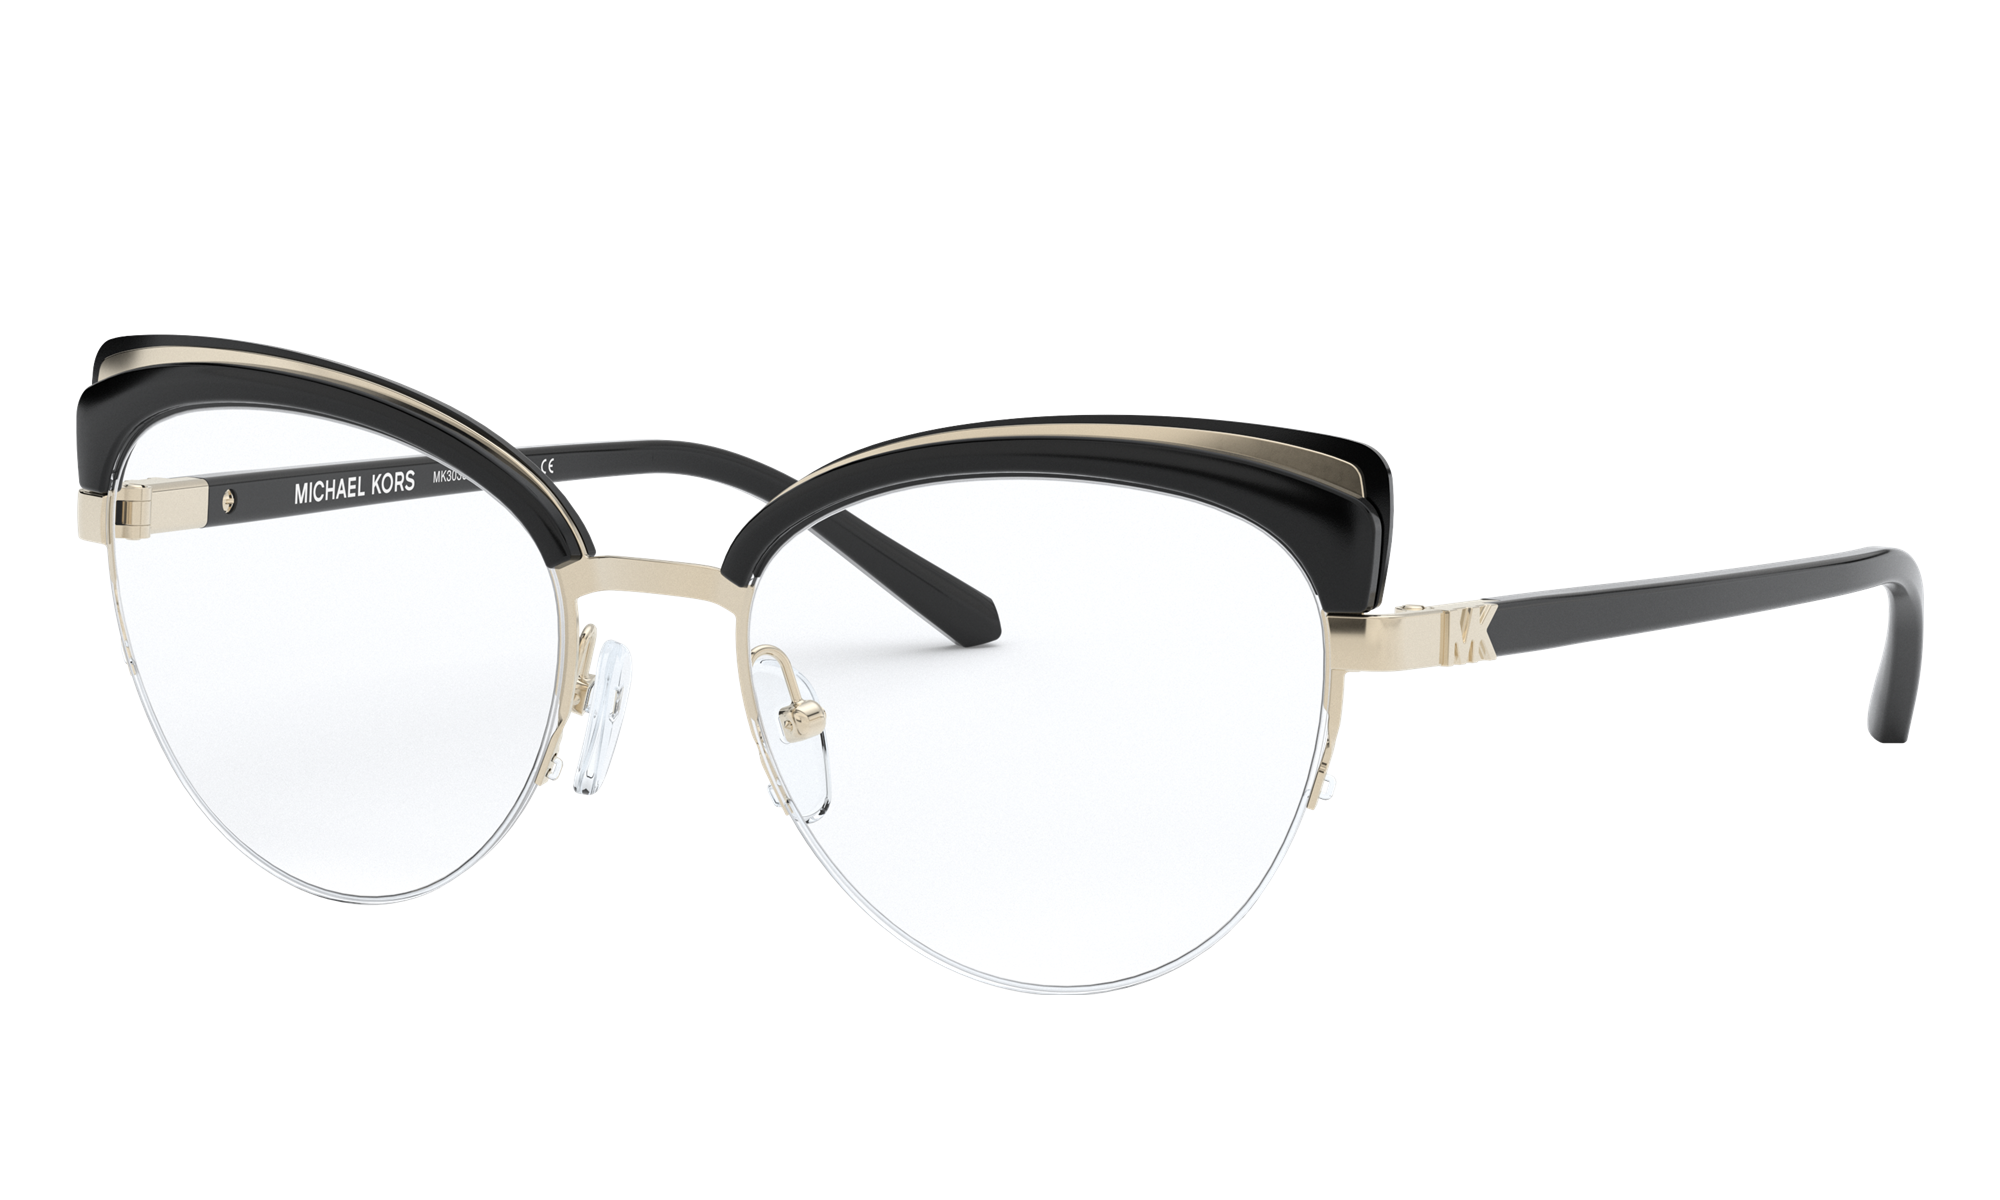 Michael Kors Glasses, Sunglasses 